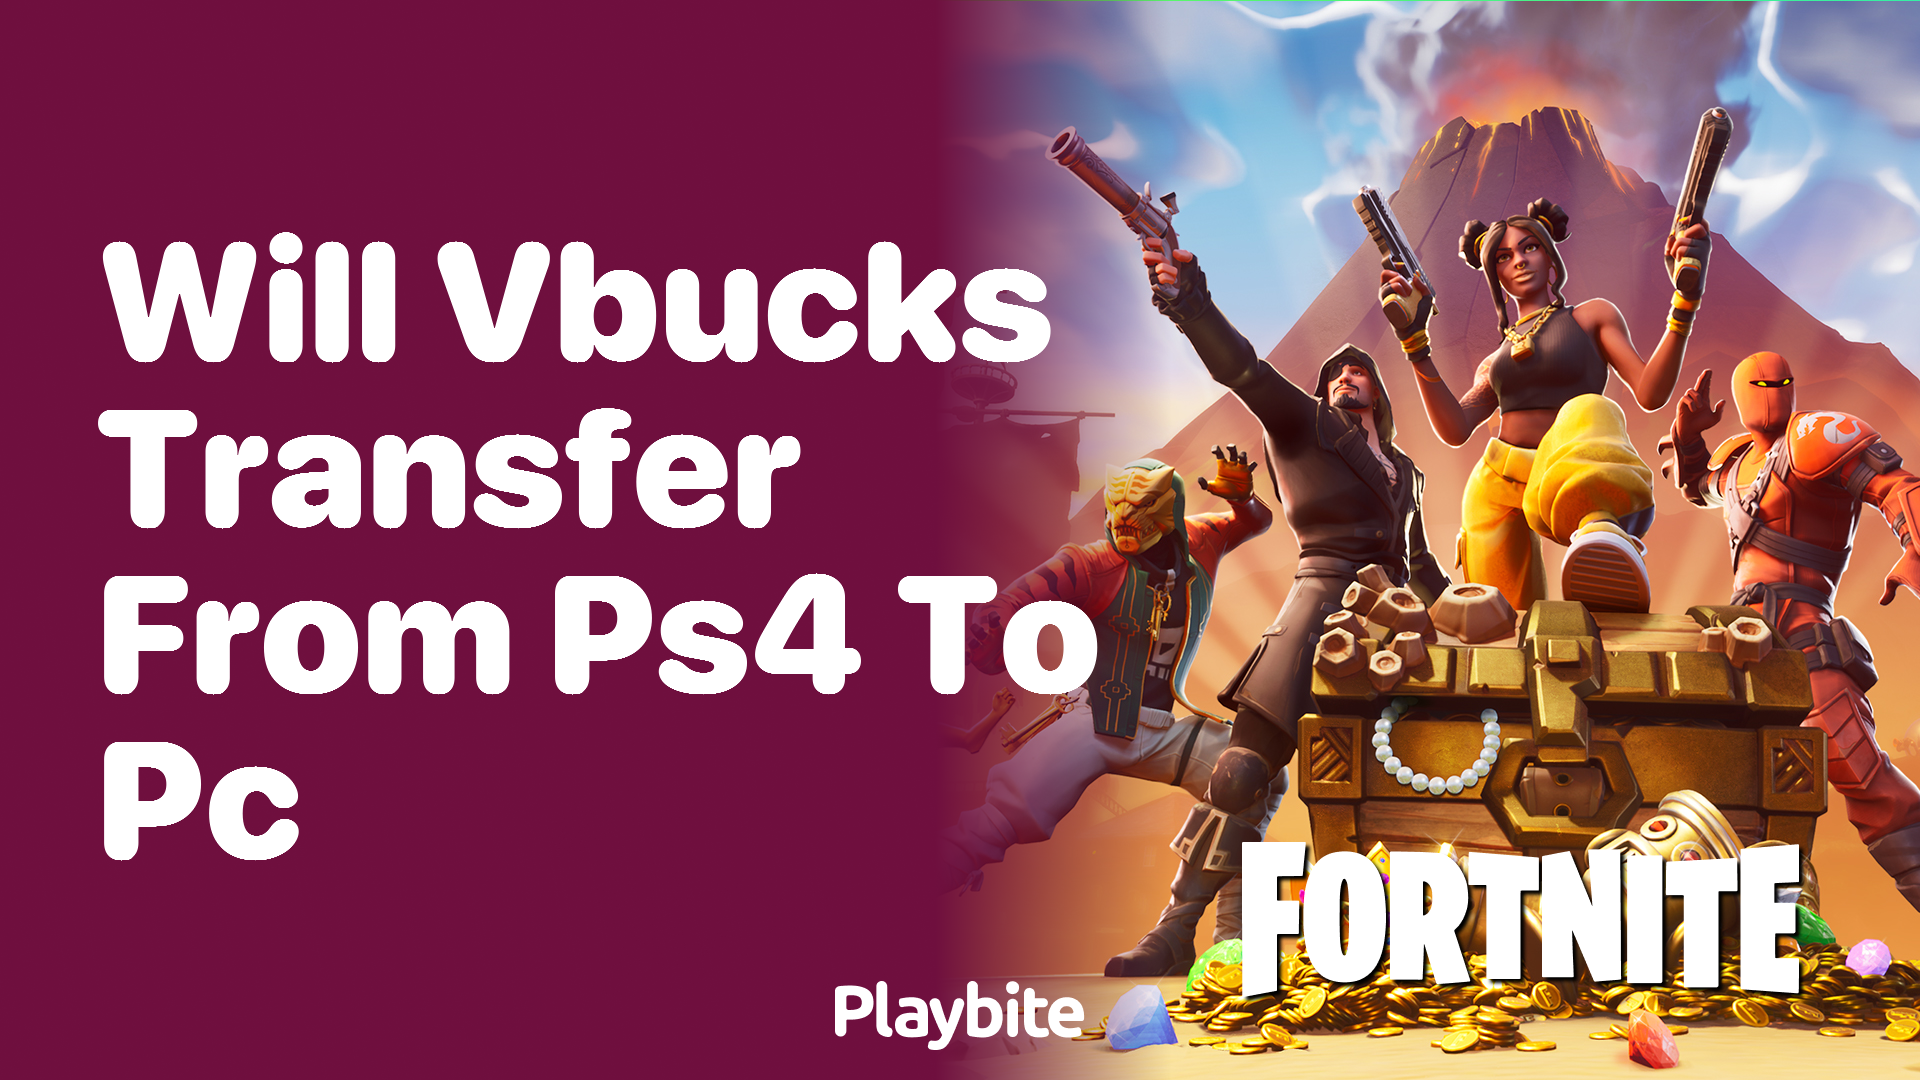 Will V-Bucks Transfer from PS4 to PC?